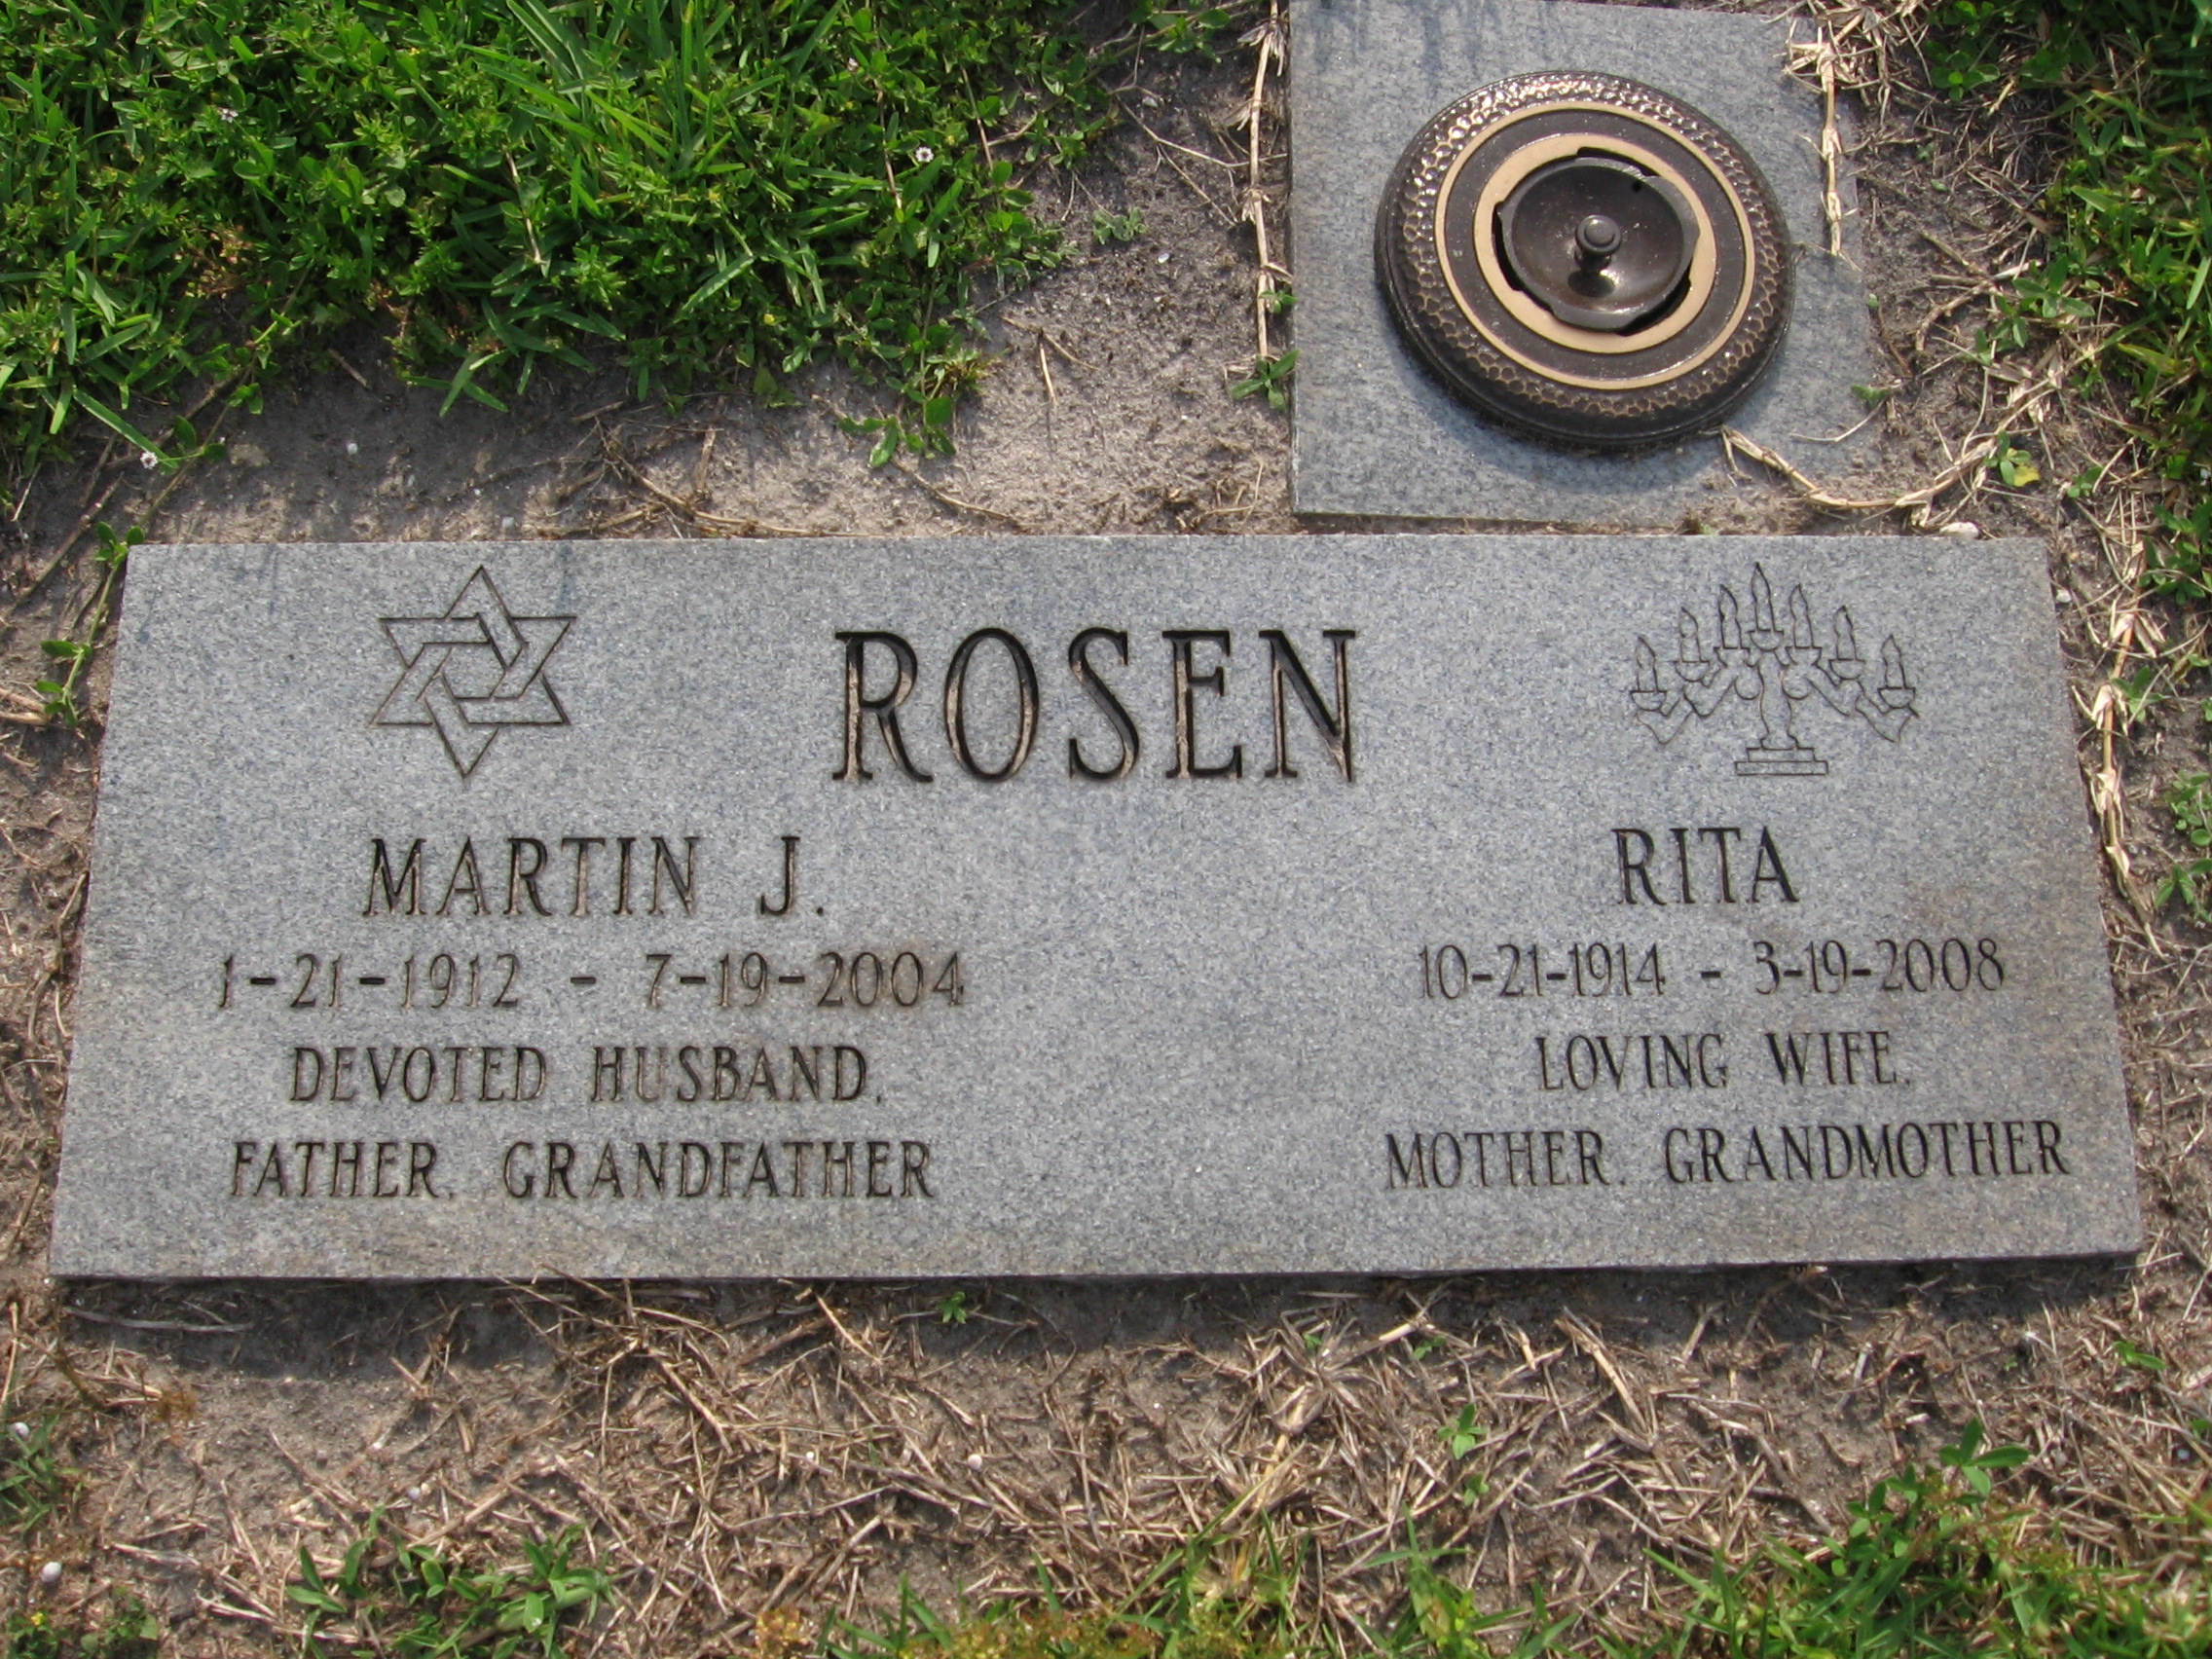 Rita Rosen